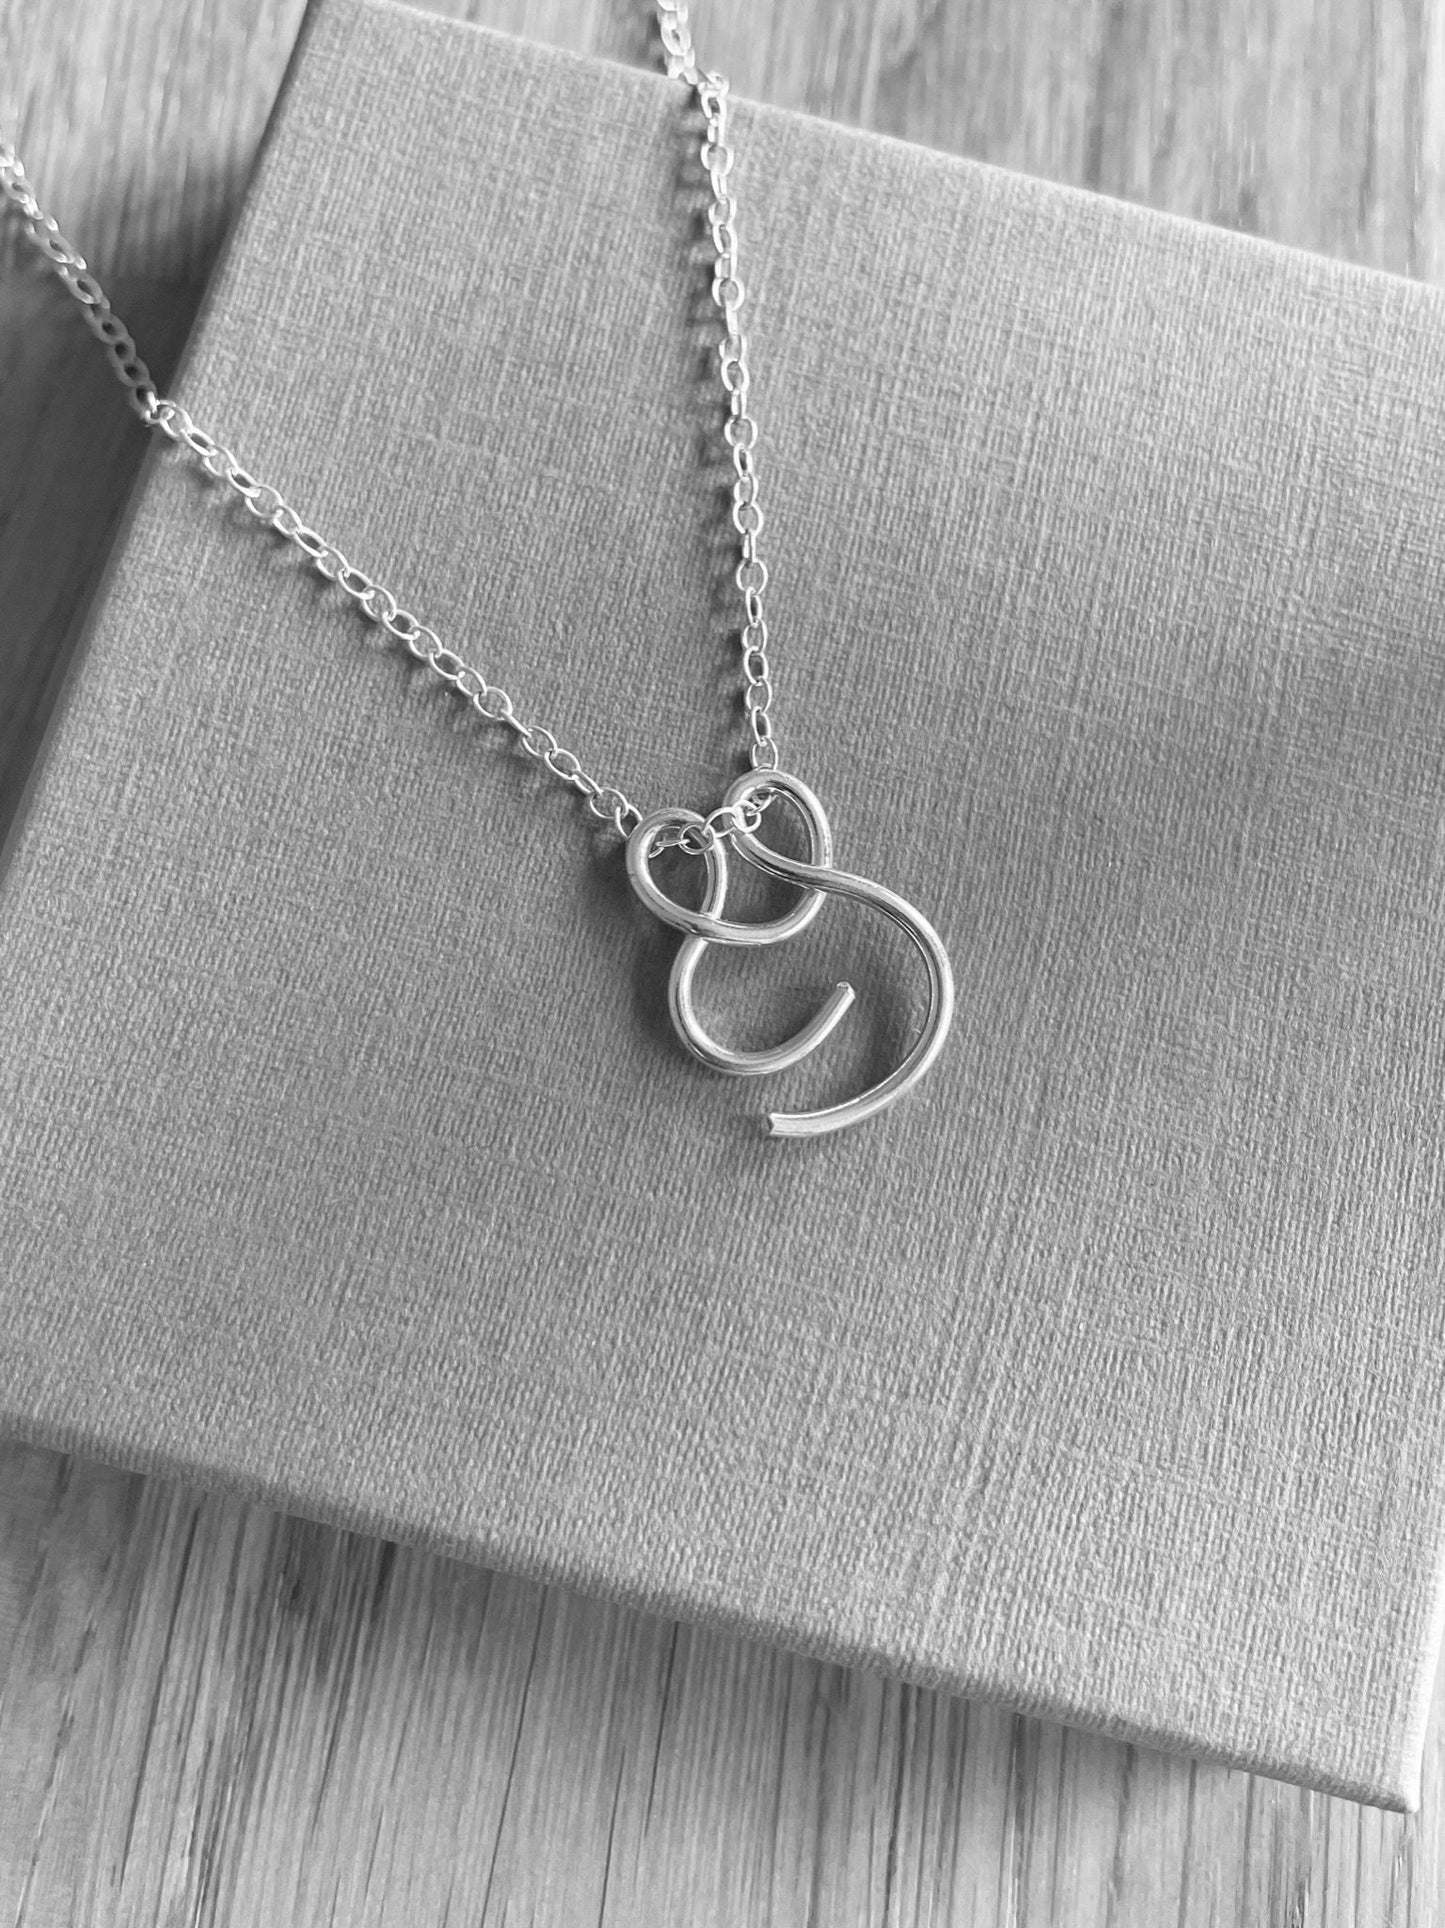 Silver friendship necklace, couples necklace